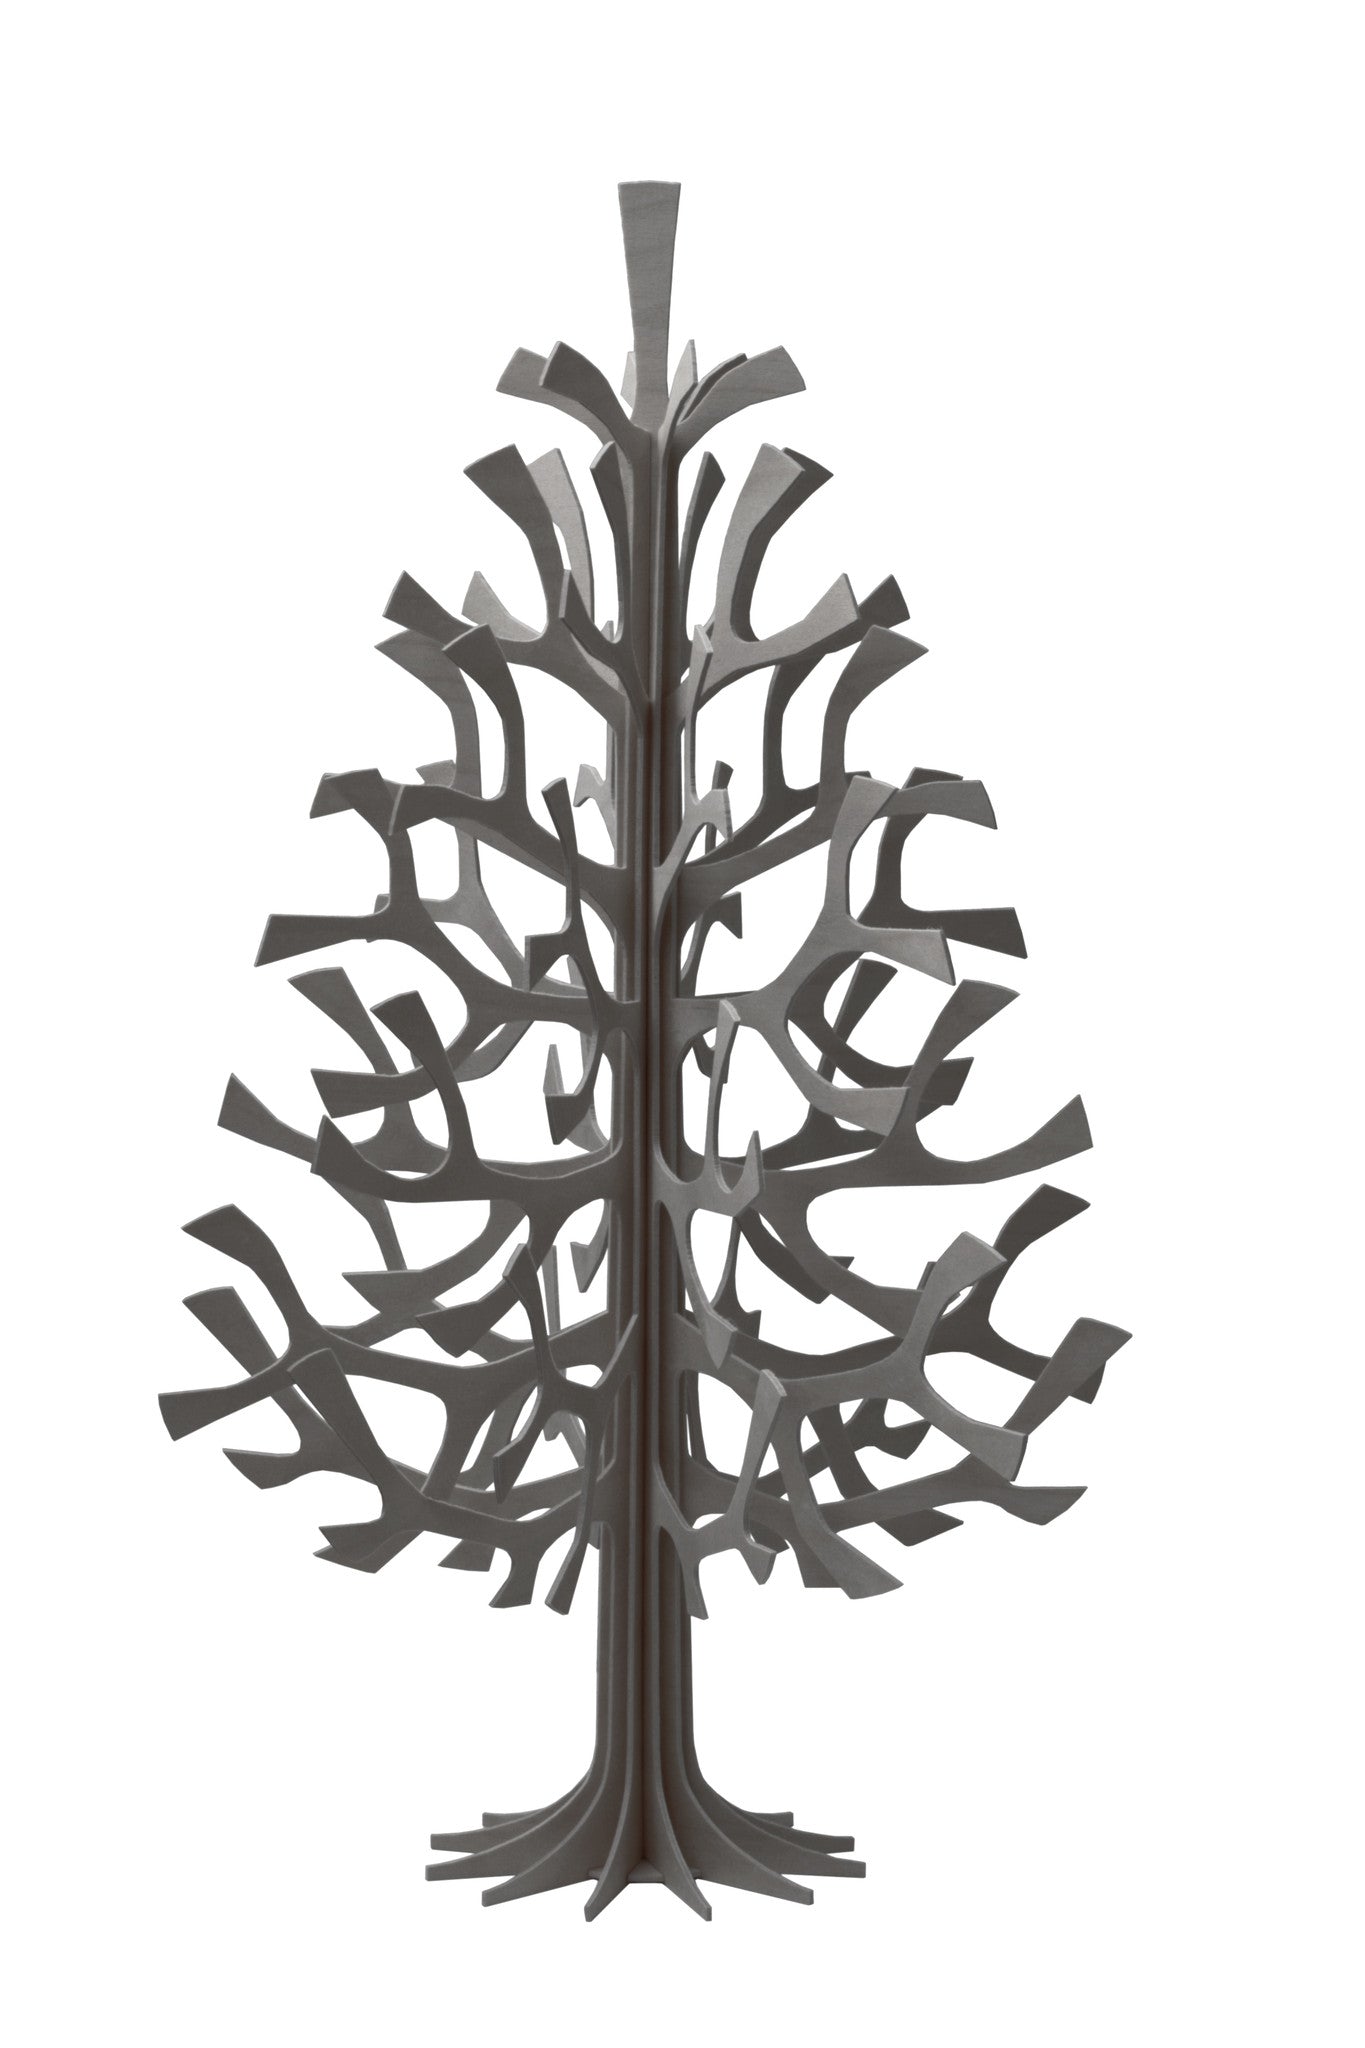 Spruce Tree by Lovi, 120cm / 48in